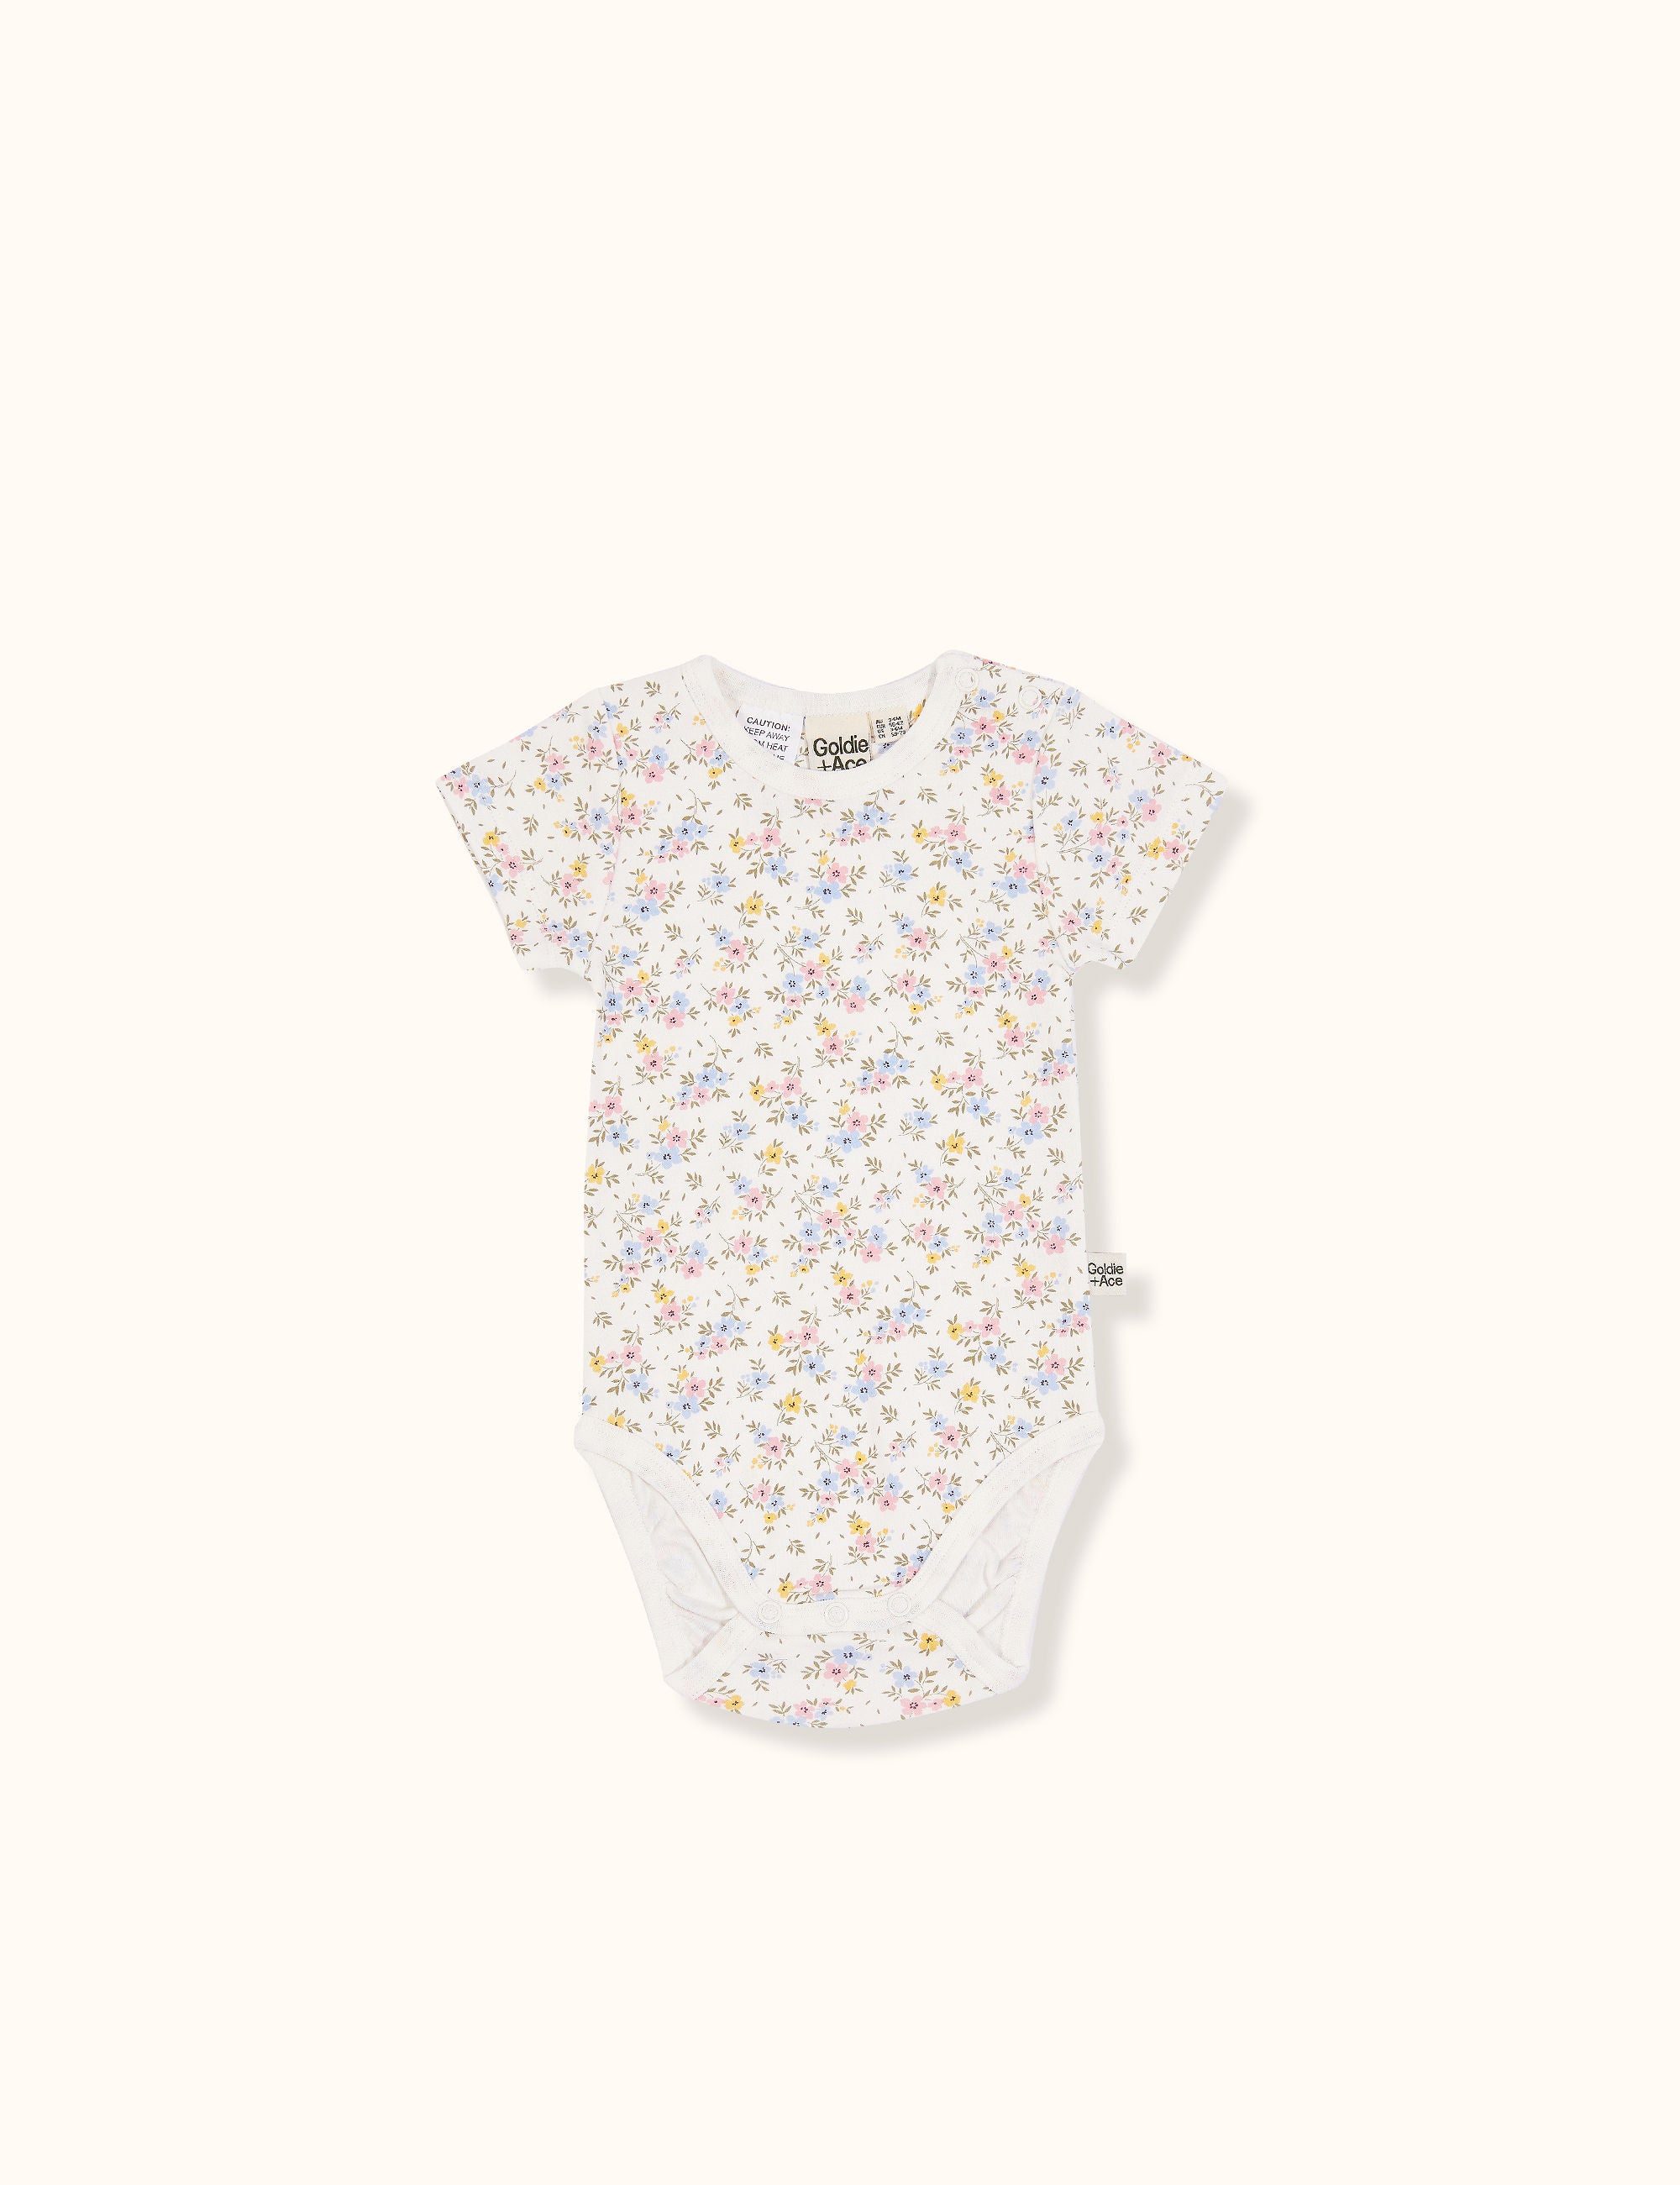 Goldie + Ace - Ditzy Floral Print Short Sleeve Bodysuit